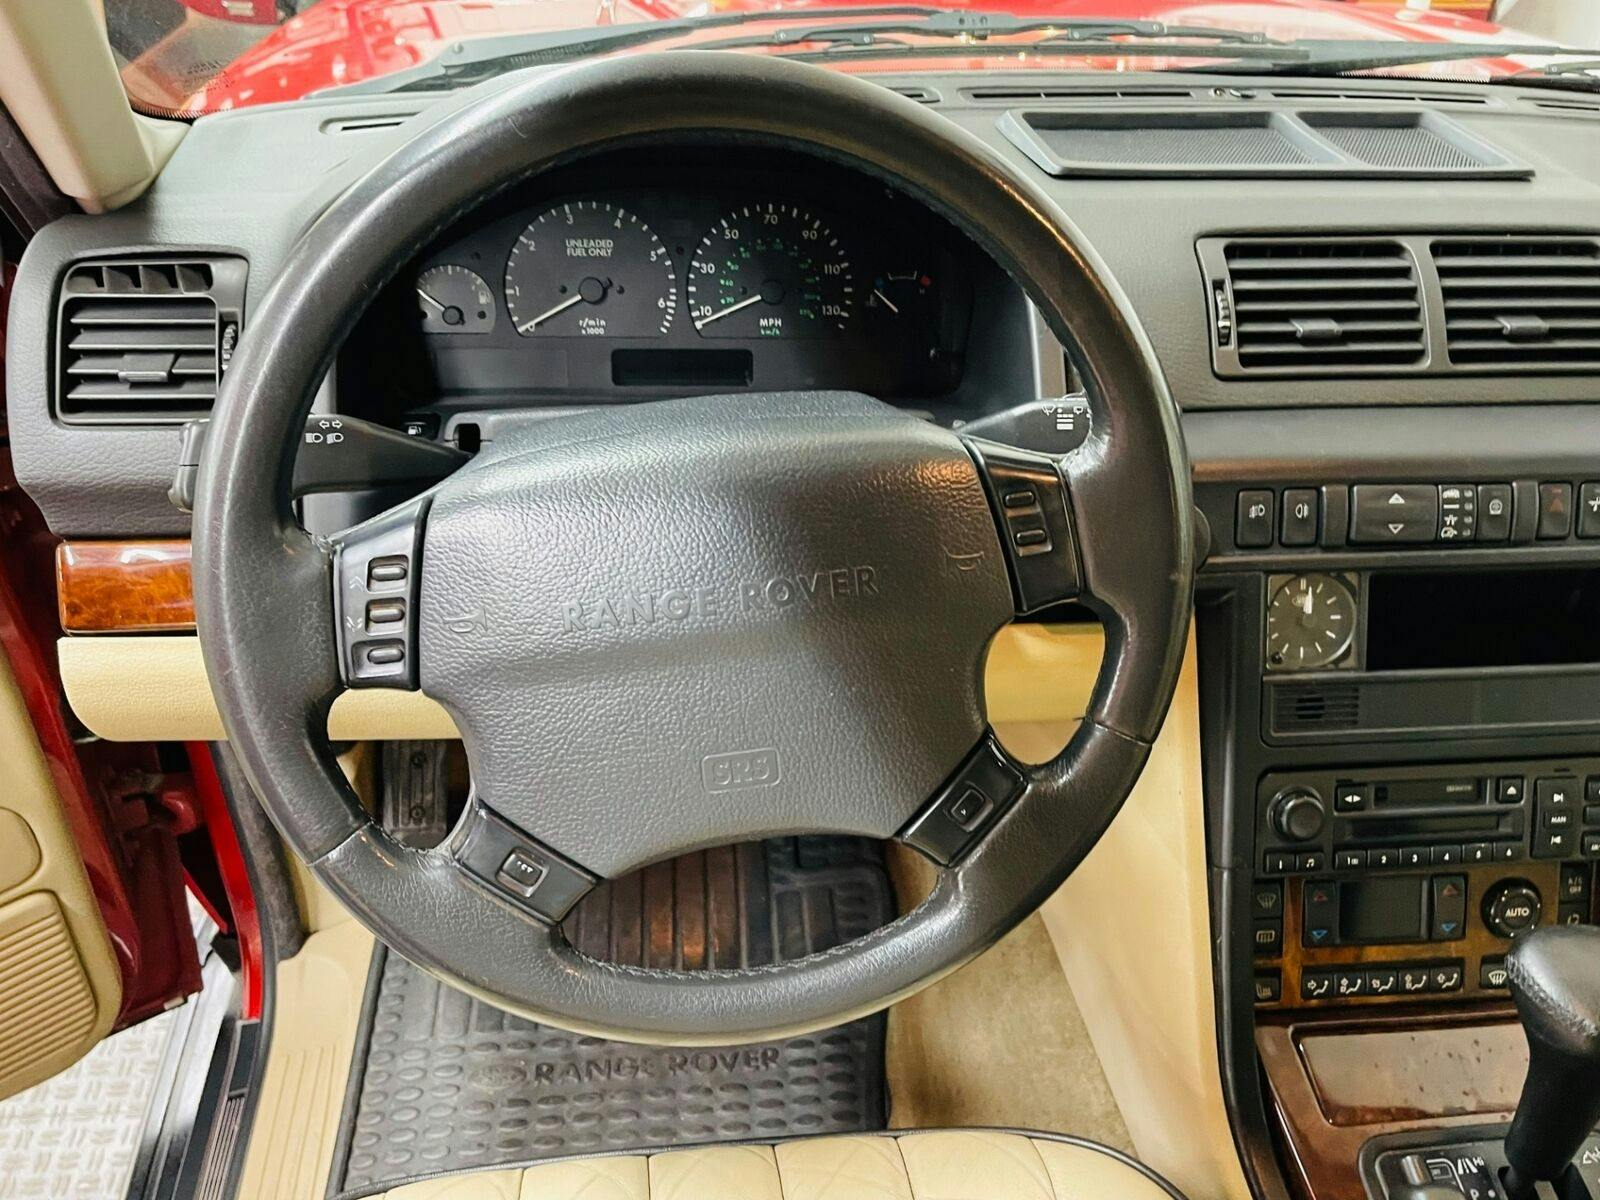 1999 Land Rover Range Rover interior steering wheel